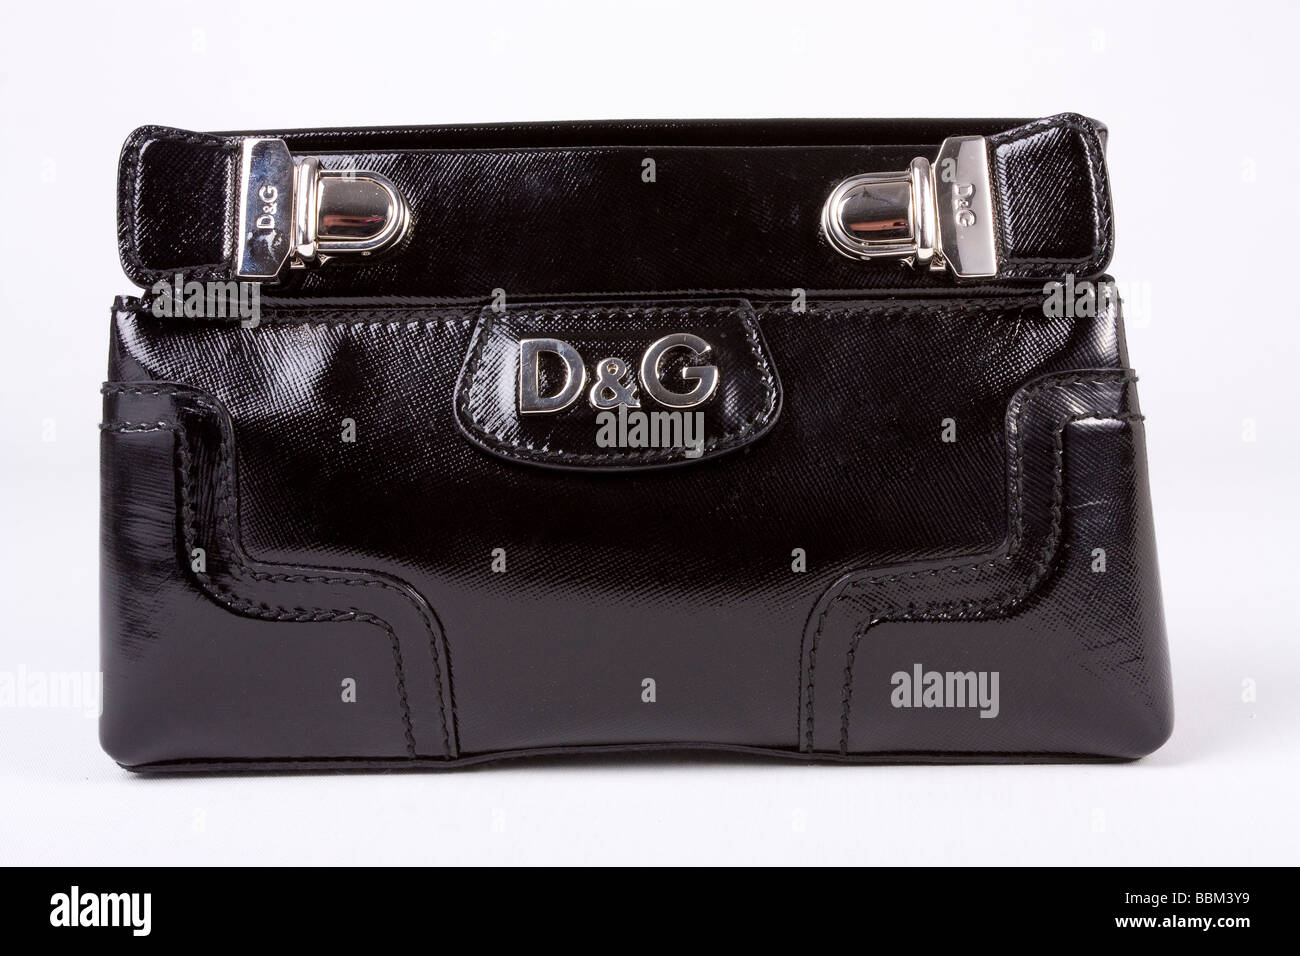 D&G small black handbag studio cutout Stock Photo